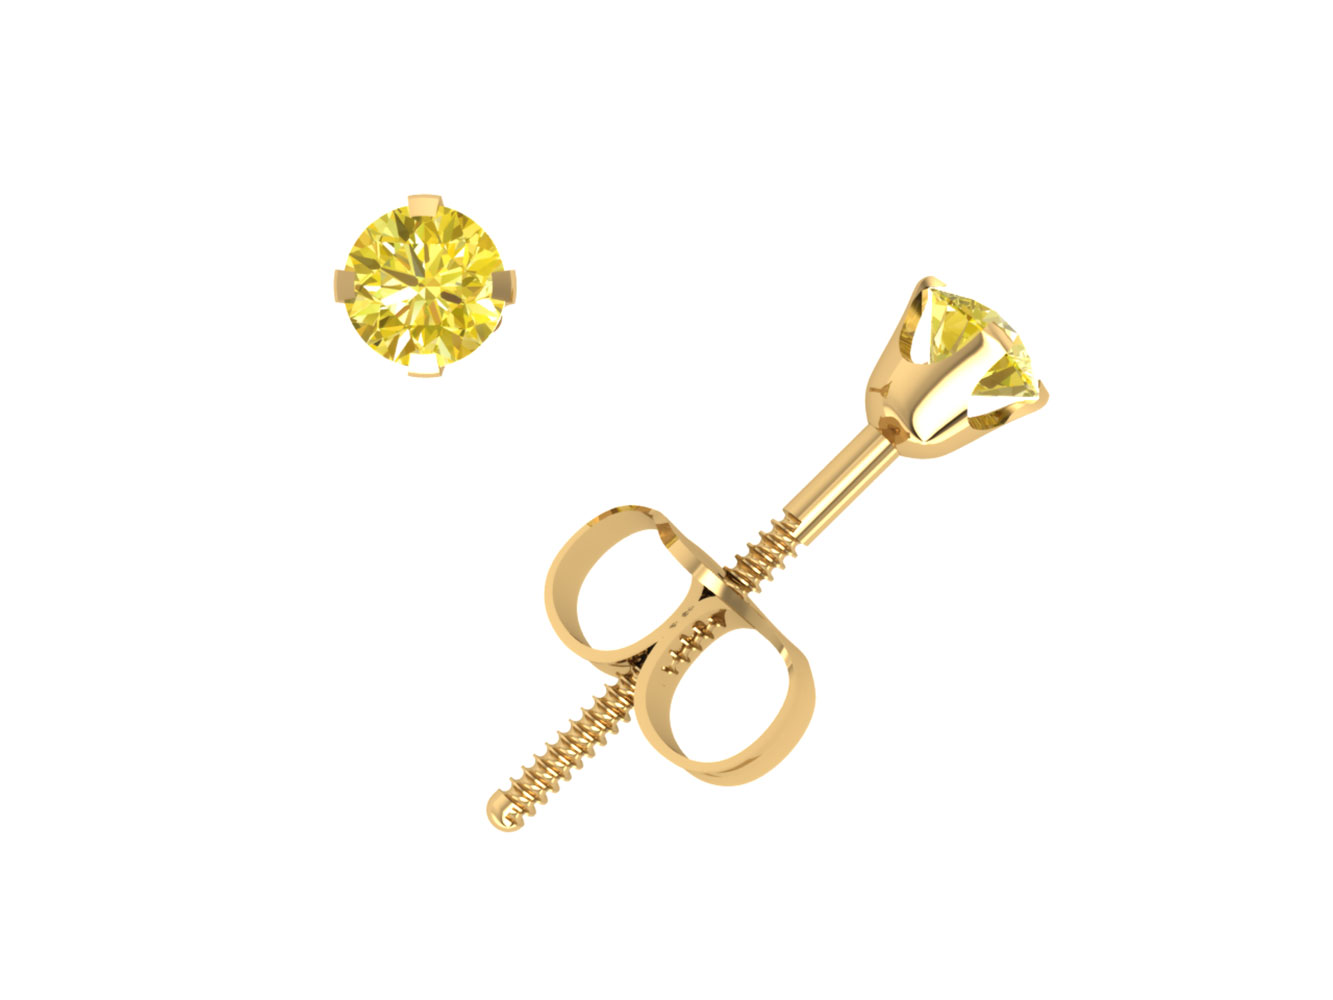 Jewel We Sell Genuine 1/3Ct Round Yellow Diamond Stud Earrings 14k White or Yellow Gold 4Prong ScrewBack I1